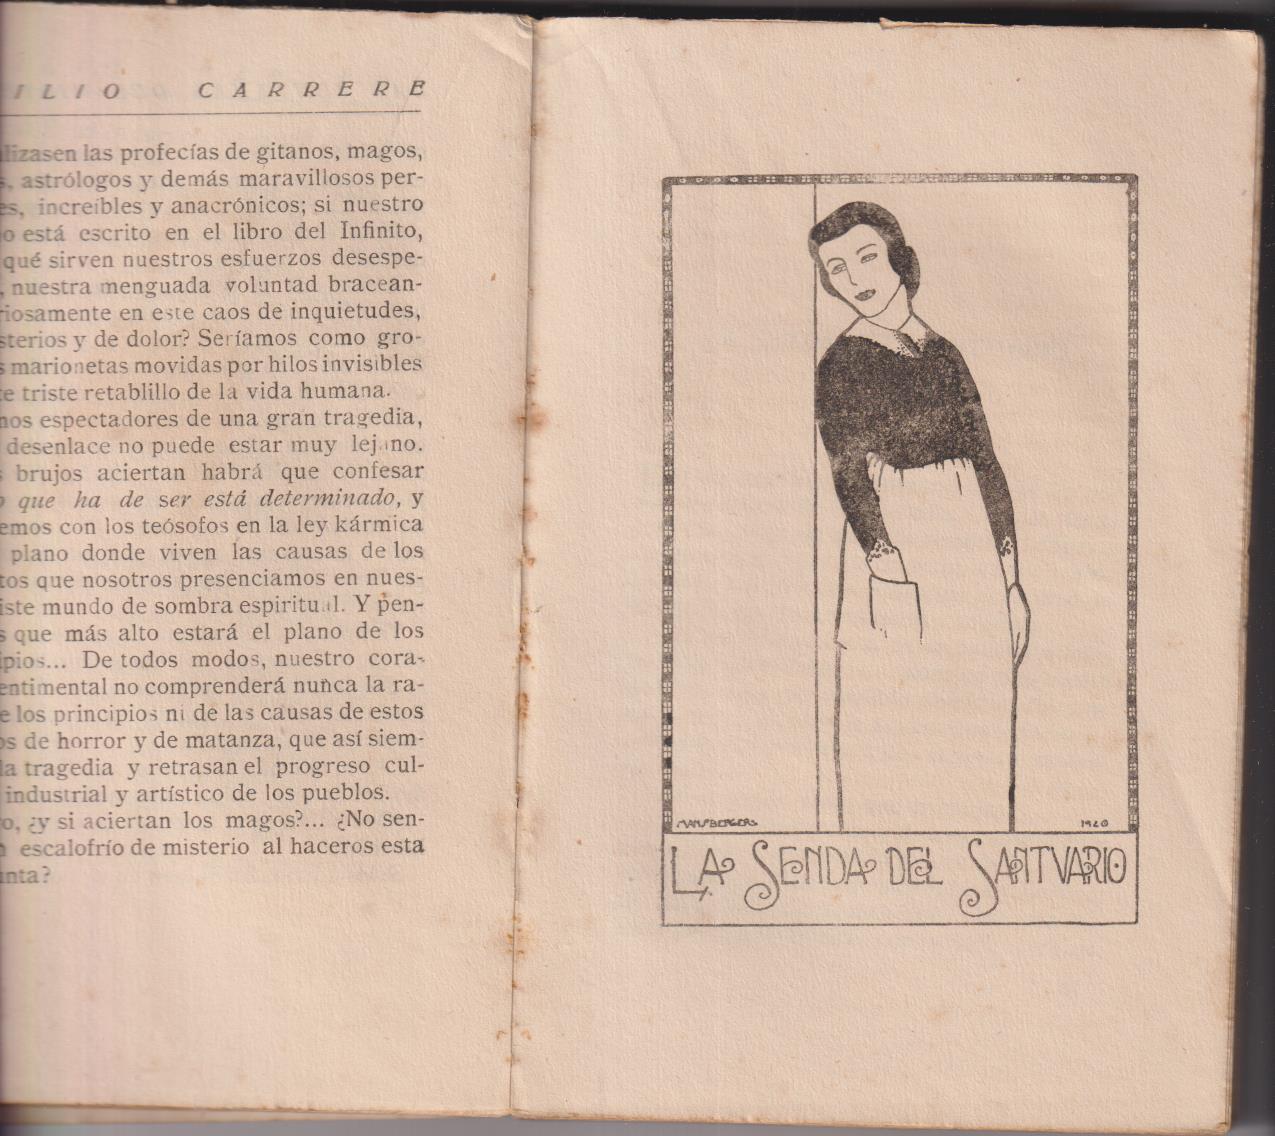 Emilio Carrere. Las Ventanas del Misterio. Editorial Mundo latino, 192?